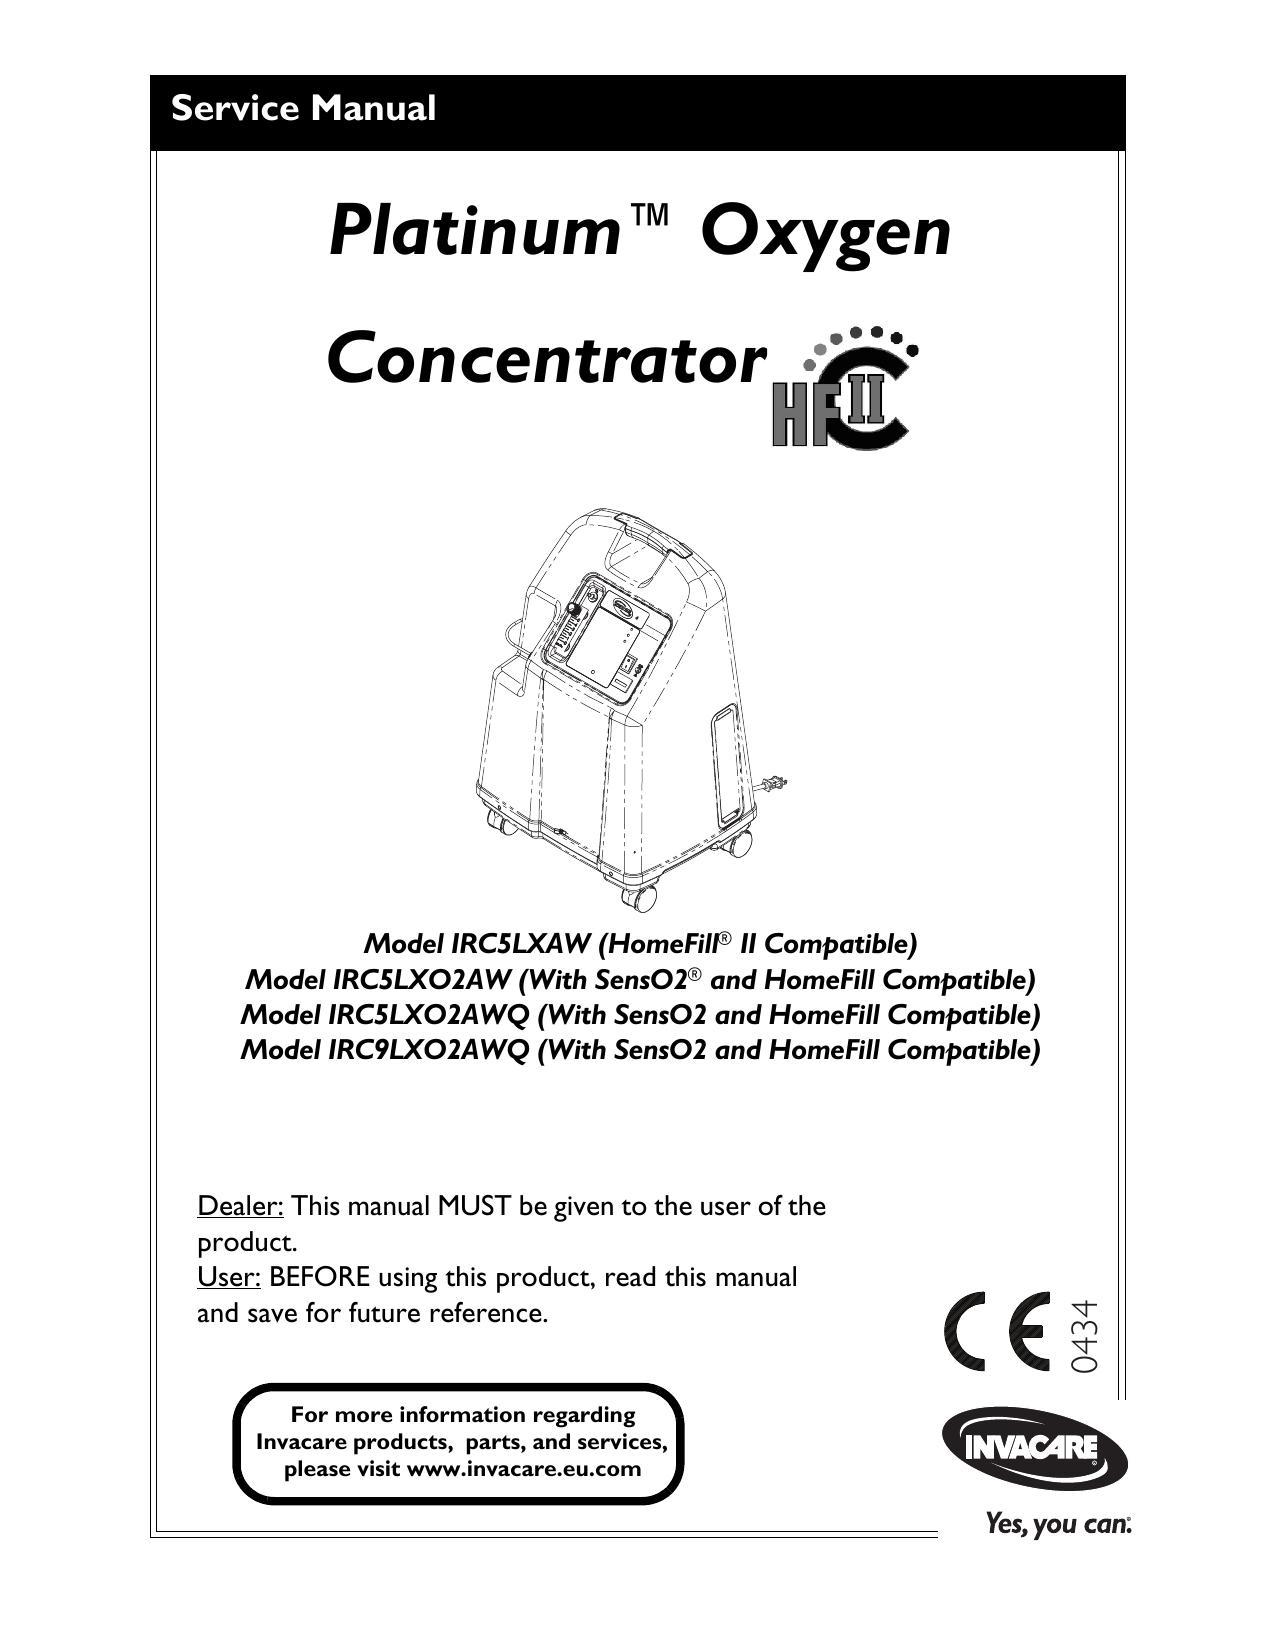 service-manual-for-platinum-tm-oxygen-concentrator-model-ircslxaw-ircslxozaw-ircslxozawq-ircalxozawq.pdf